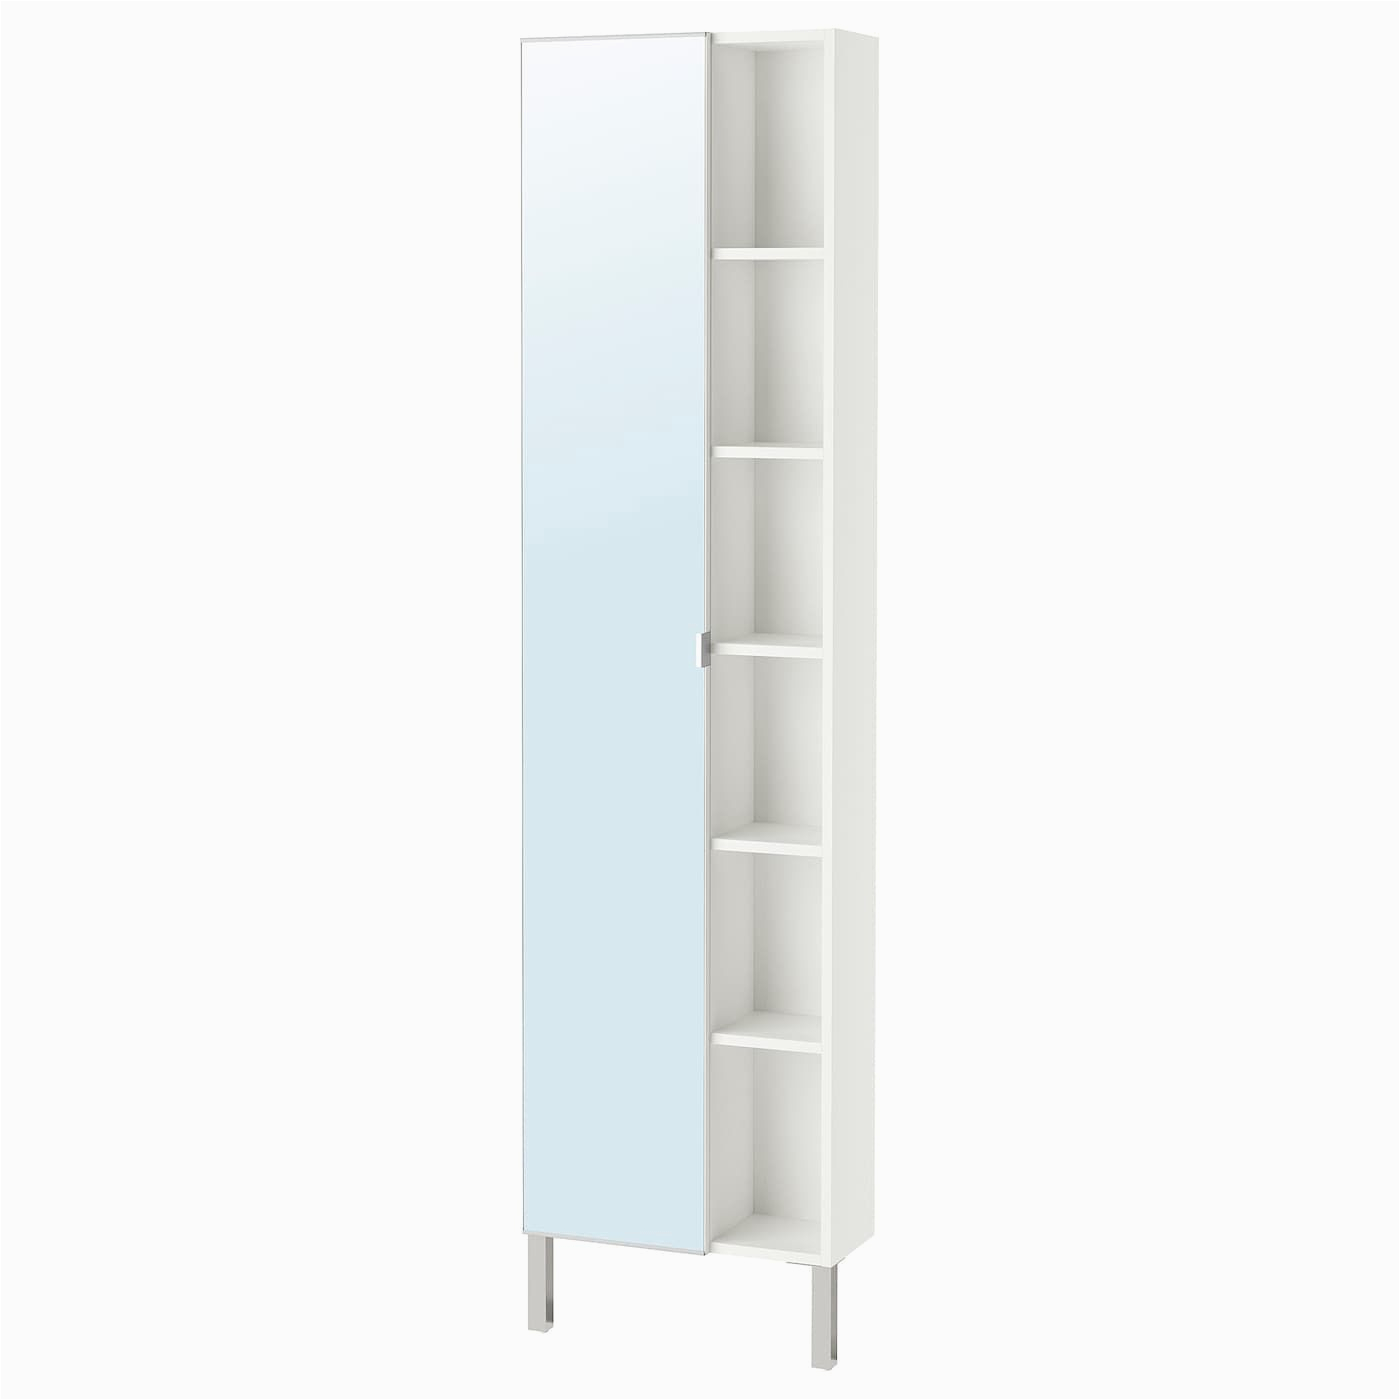 Badezimmer Schrank Inea Lillngen Spiegelschrank 1 Tür 1 Abschlregal Weiß Ikea